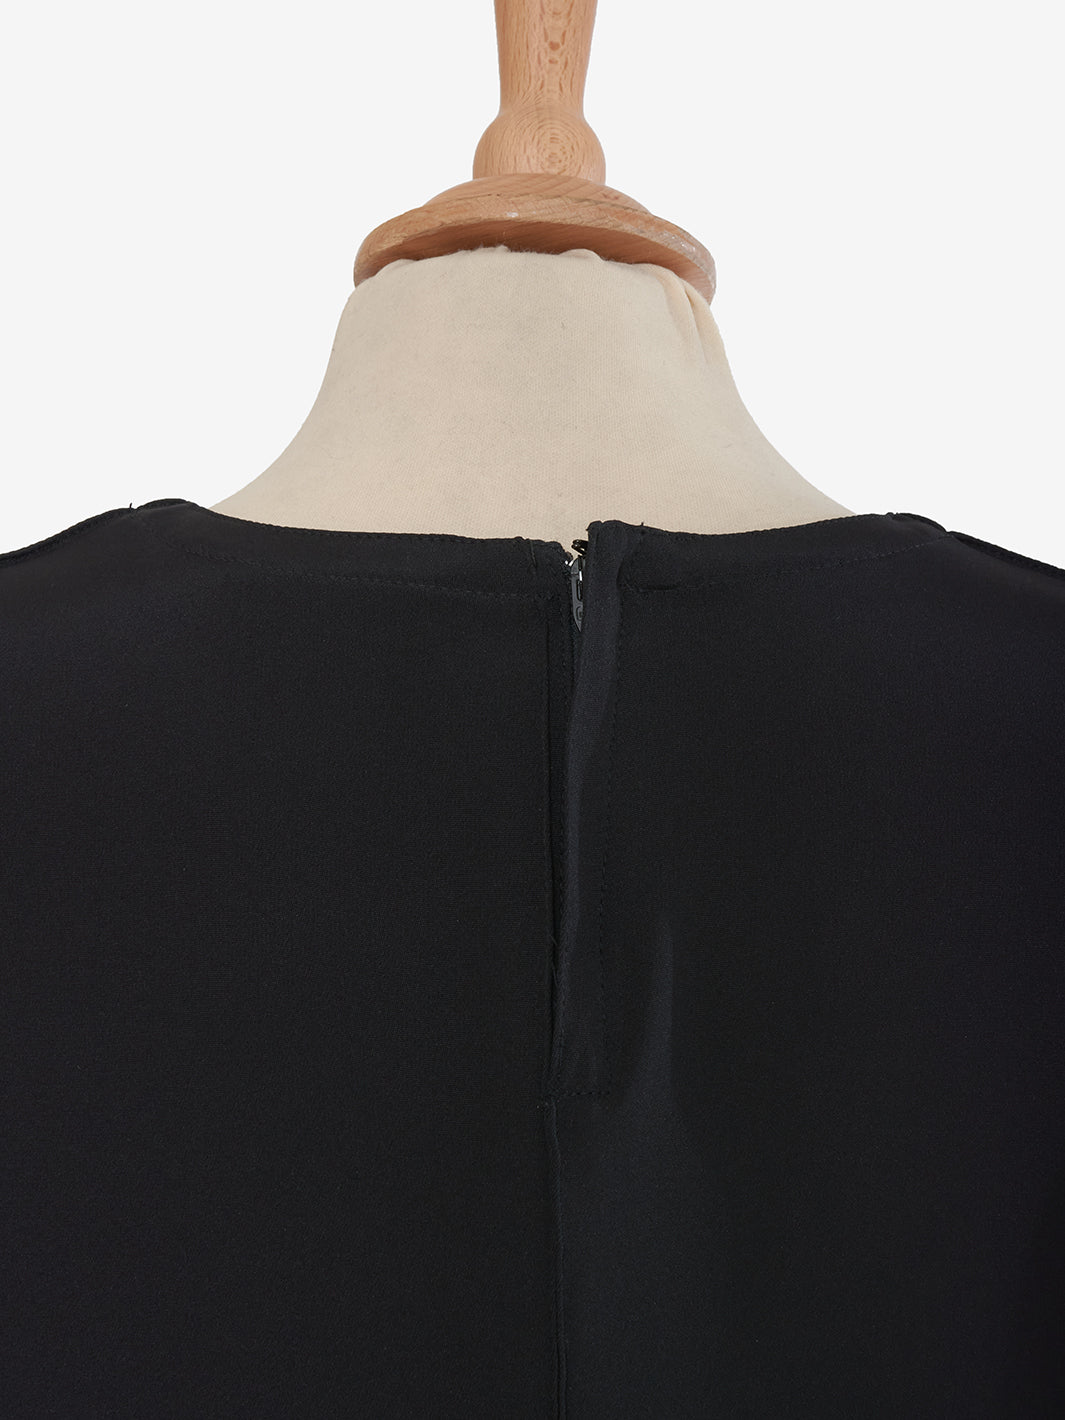 Gianni Versace Black Silk Sweater